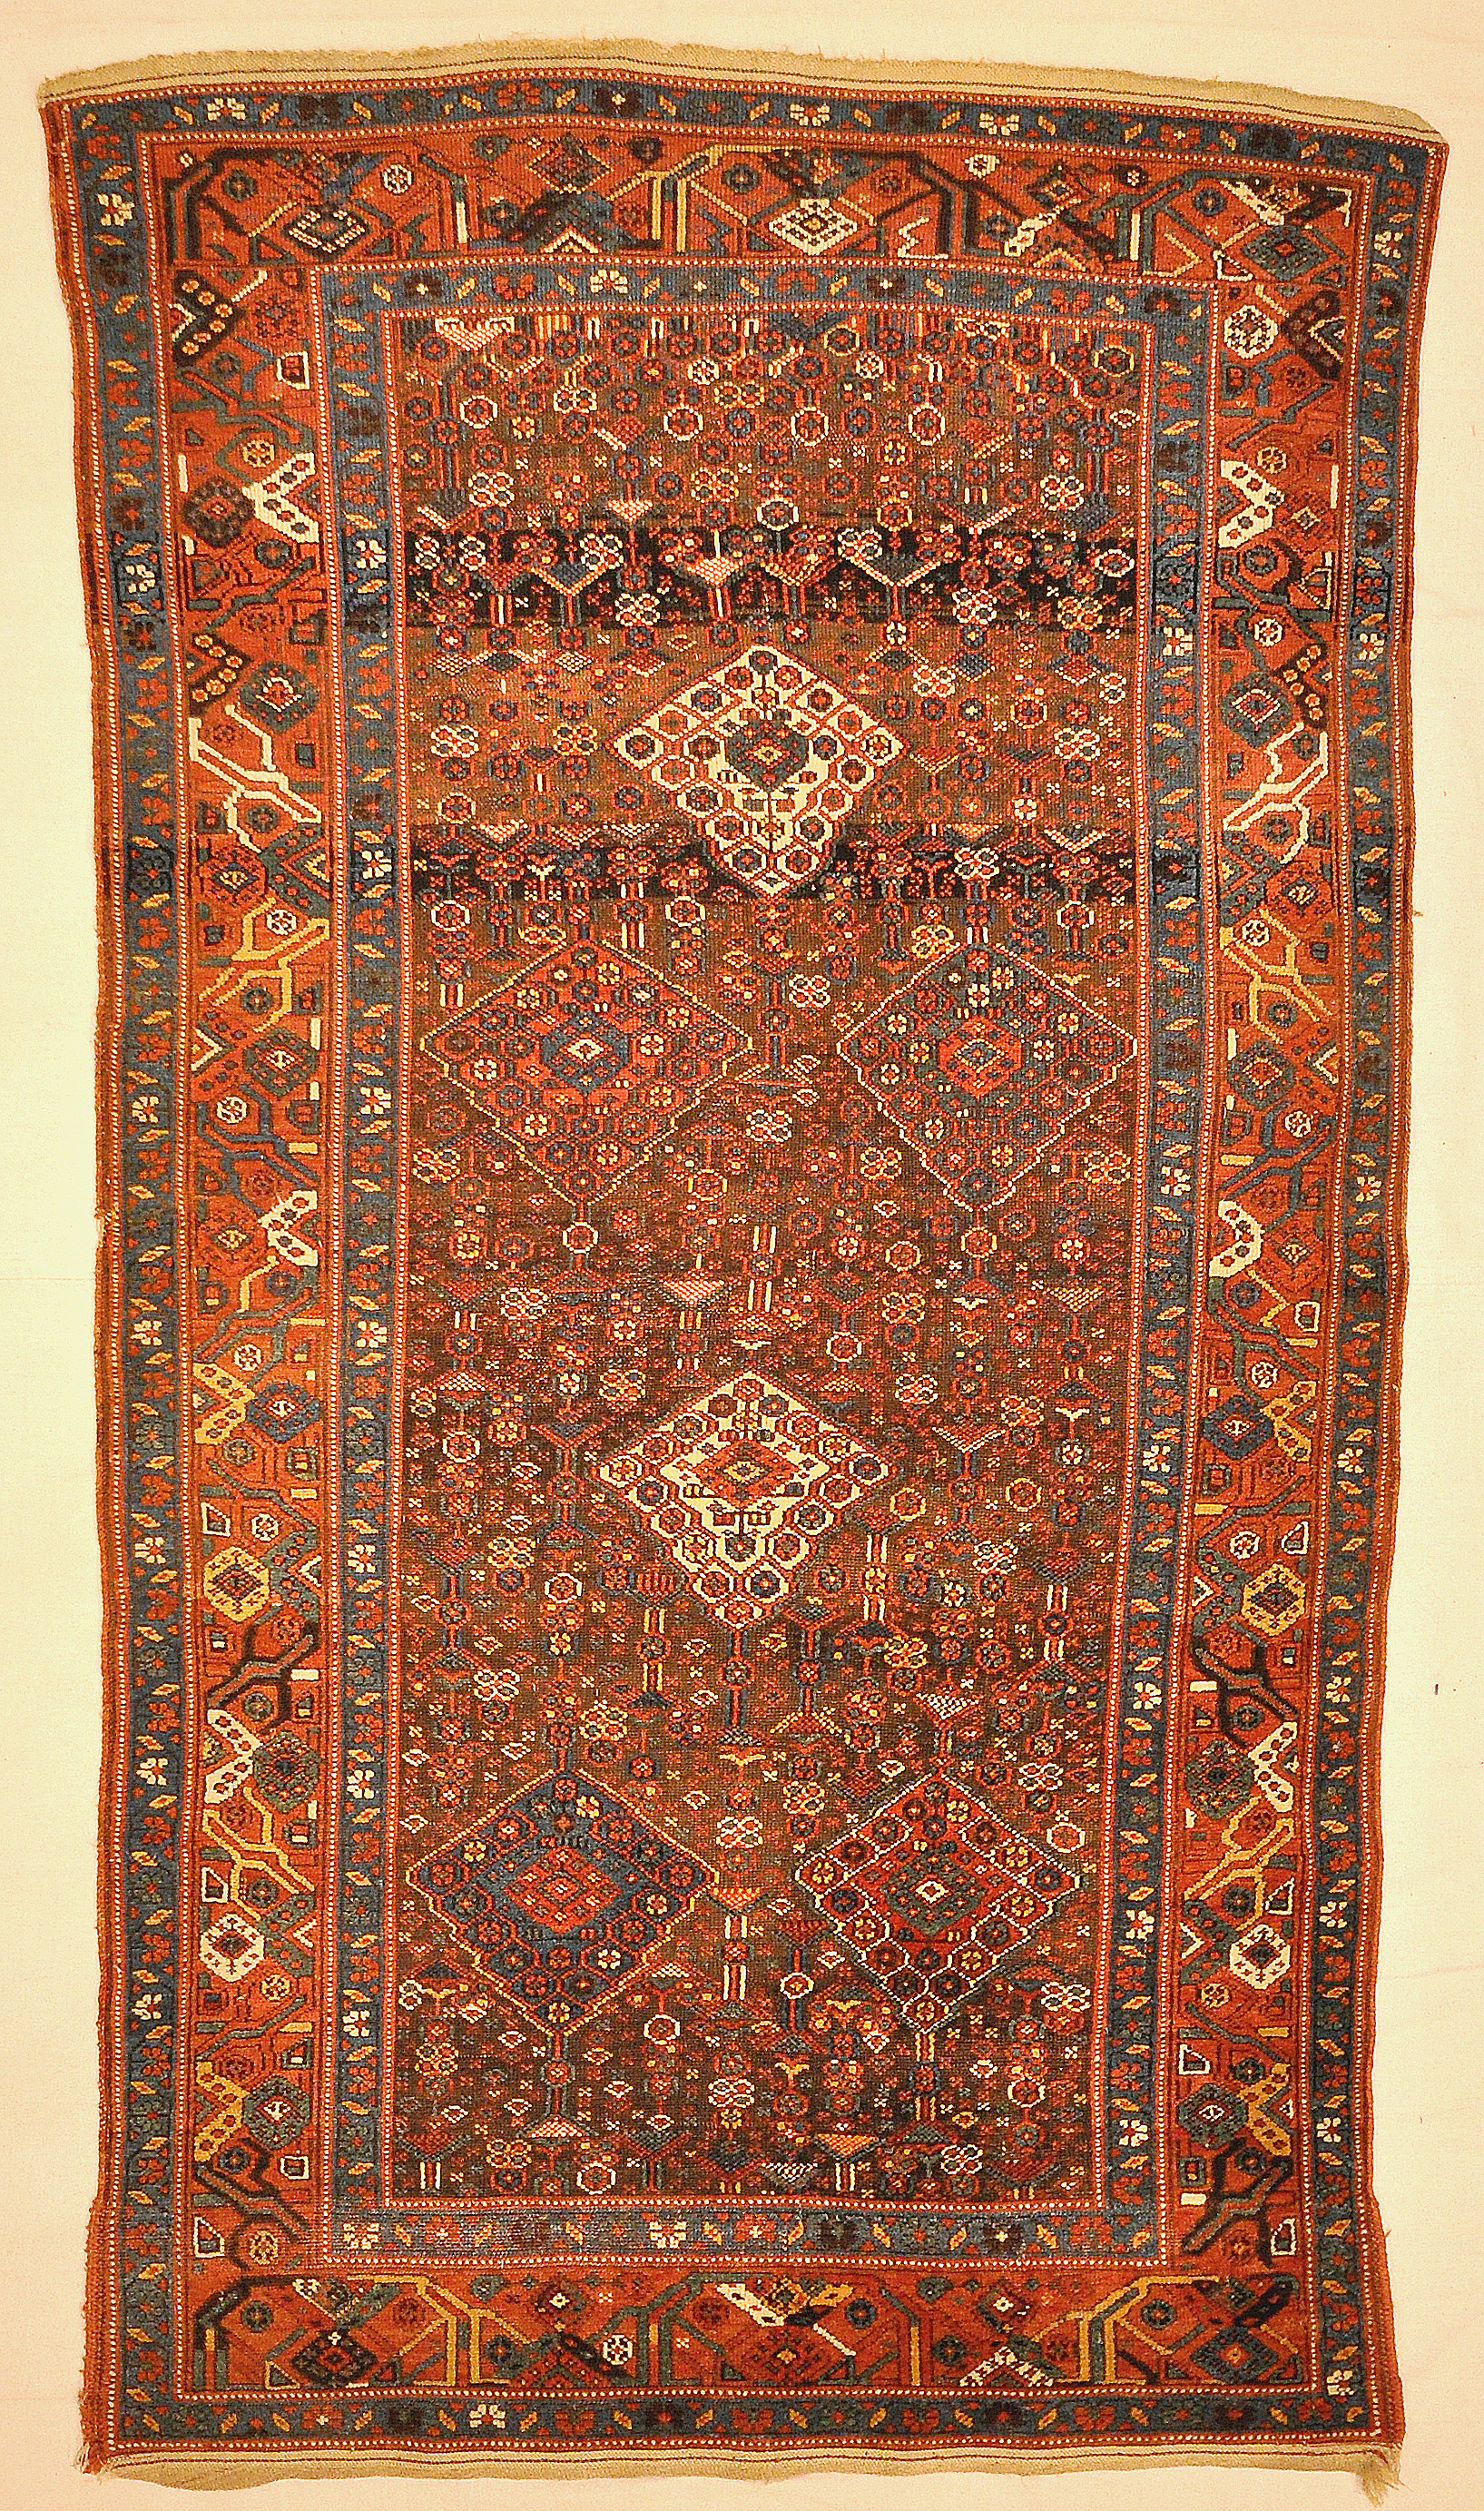 Antique West Persian Kurdish Rug circa 1875 Genuine Authentic Intricate Woven Carpet Art Santa Barbara Design Center Rugs and More